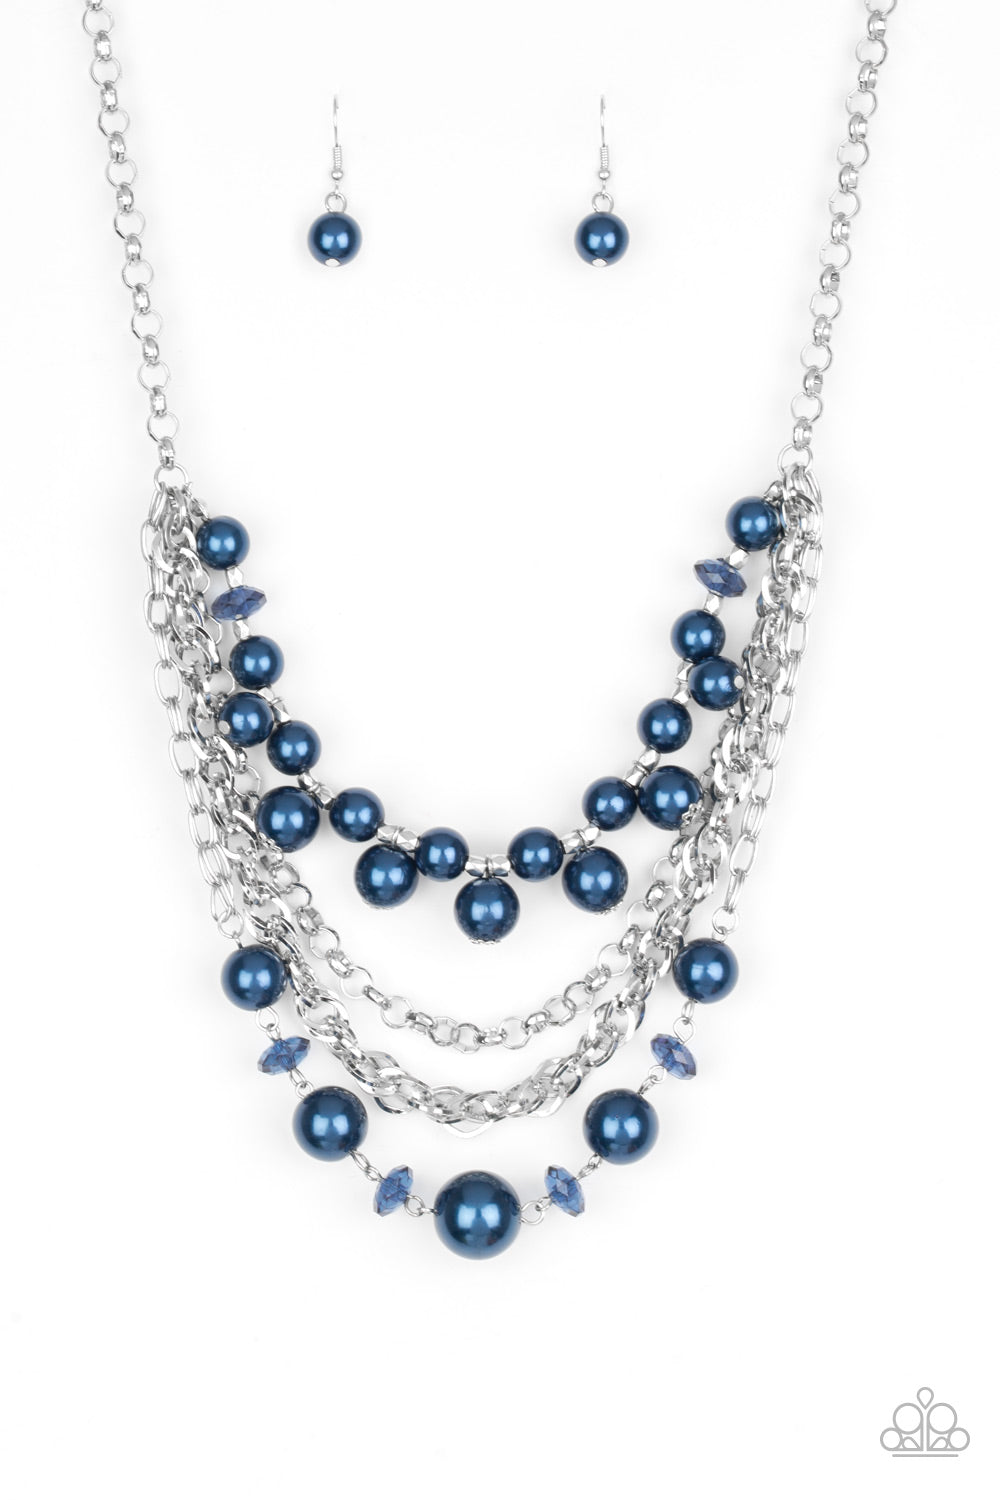 Rockin' Rockette - Blue Necklace freeshipping - JewLz4u Gemstone Gallery